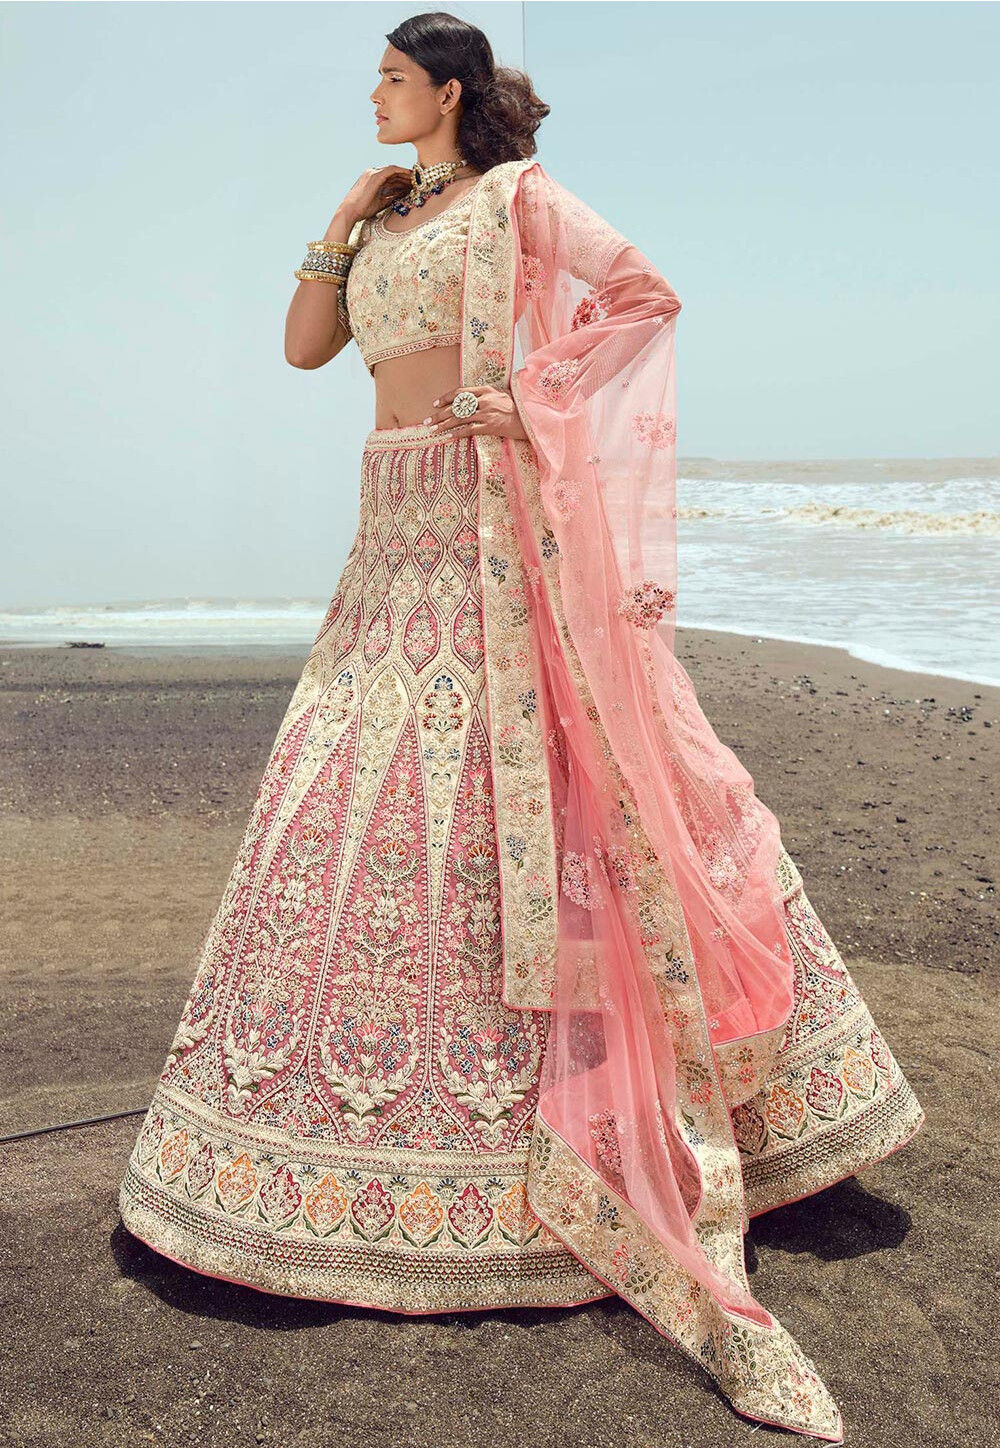 Buy INDIAN FASHION HUB Women's Satin Semi-stitched Indian Wedding Lehenga  Choli (Cream And Pink, Free Size) at Amazon.in